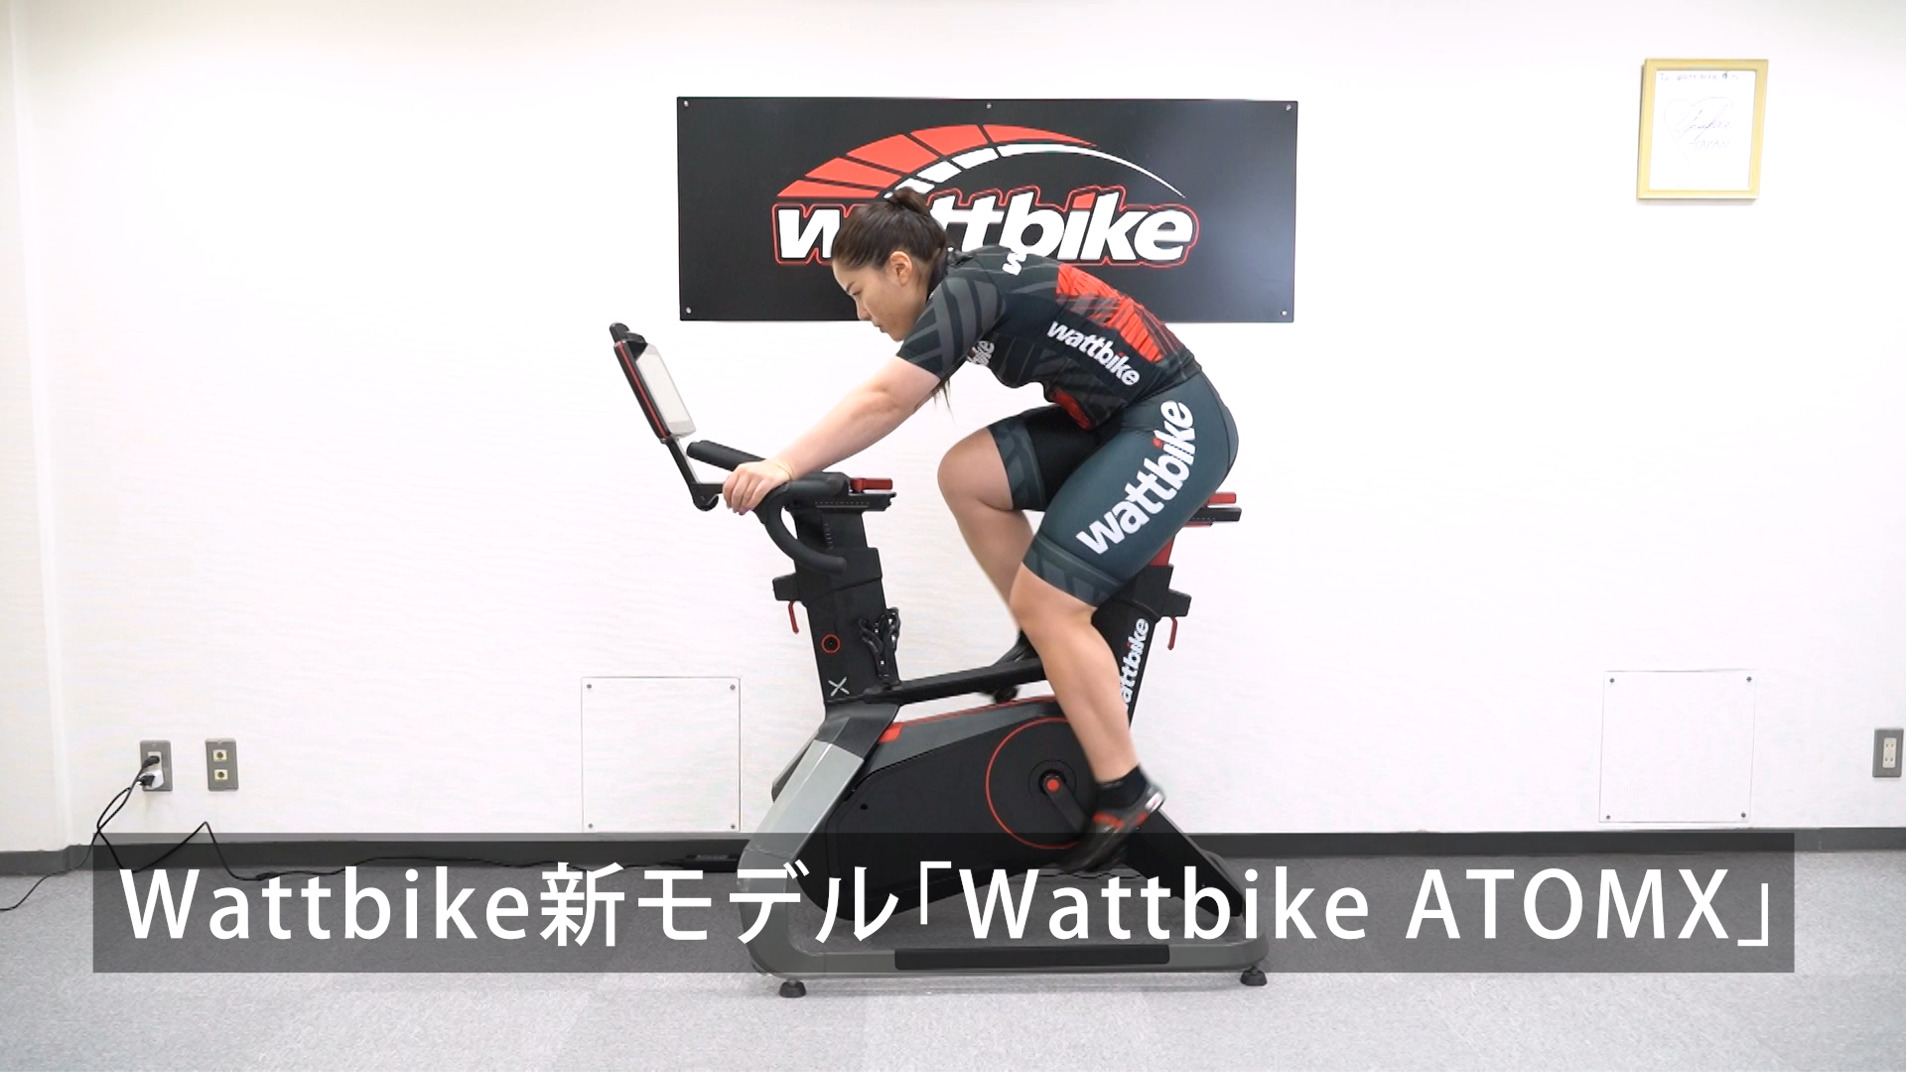 Wattbike ATOMX　プロモーションビデオ公開